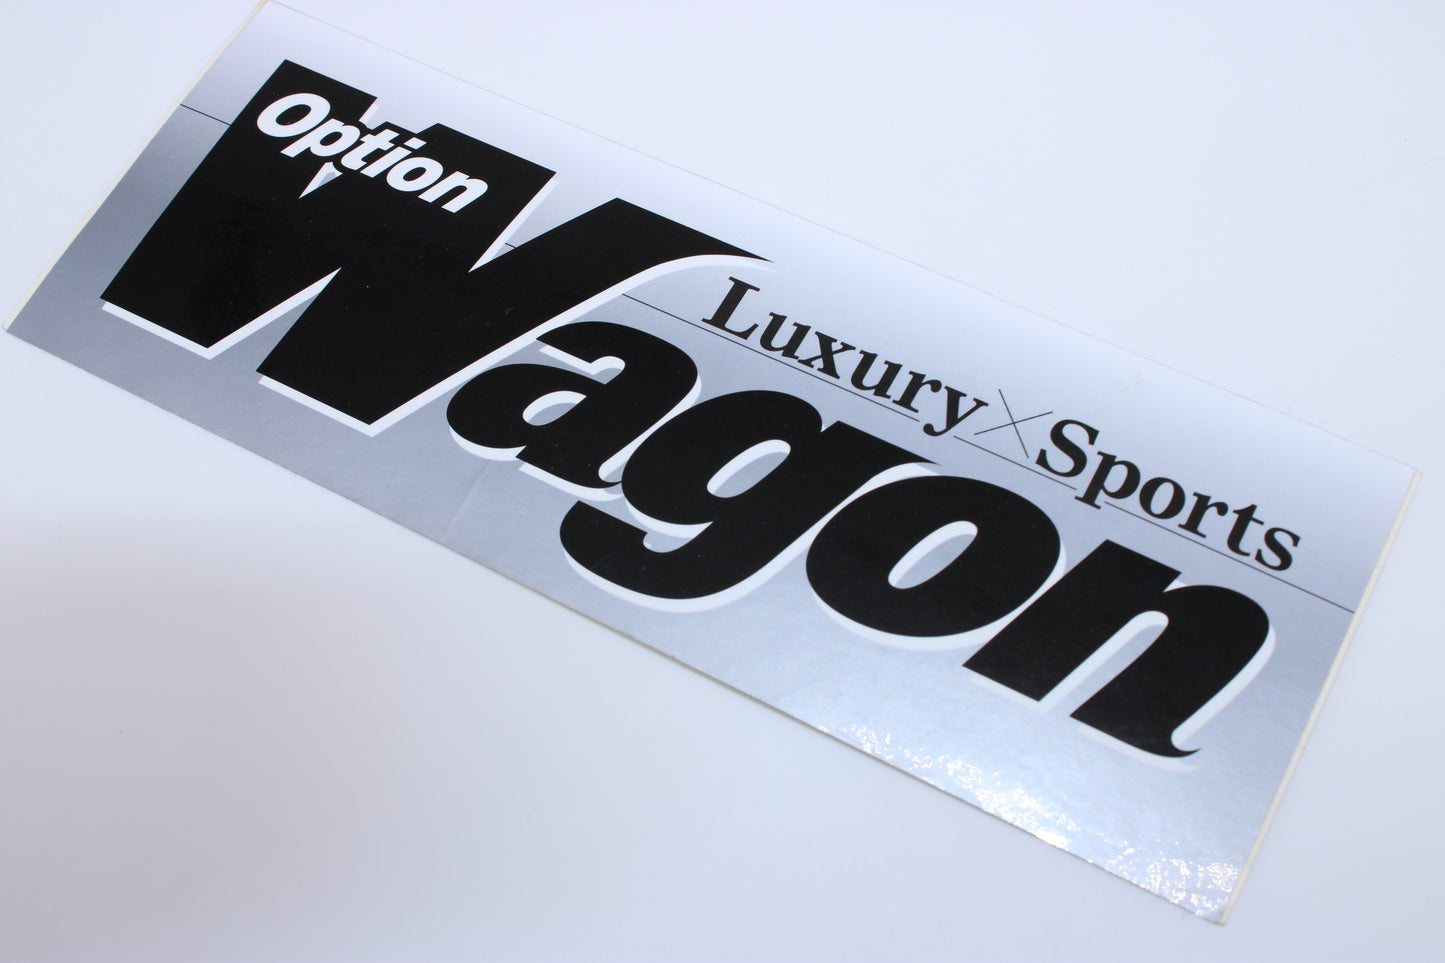 Option Luxury x Sports Wagon